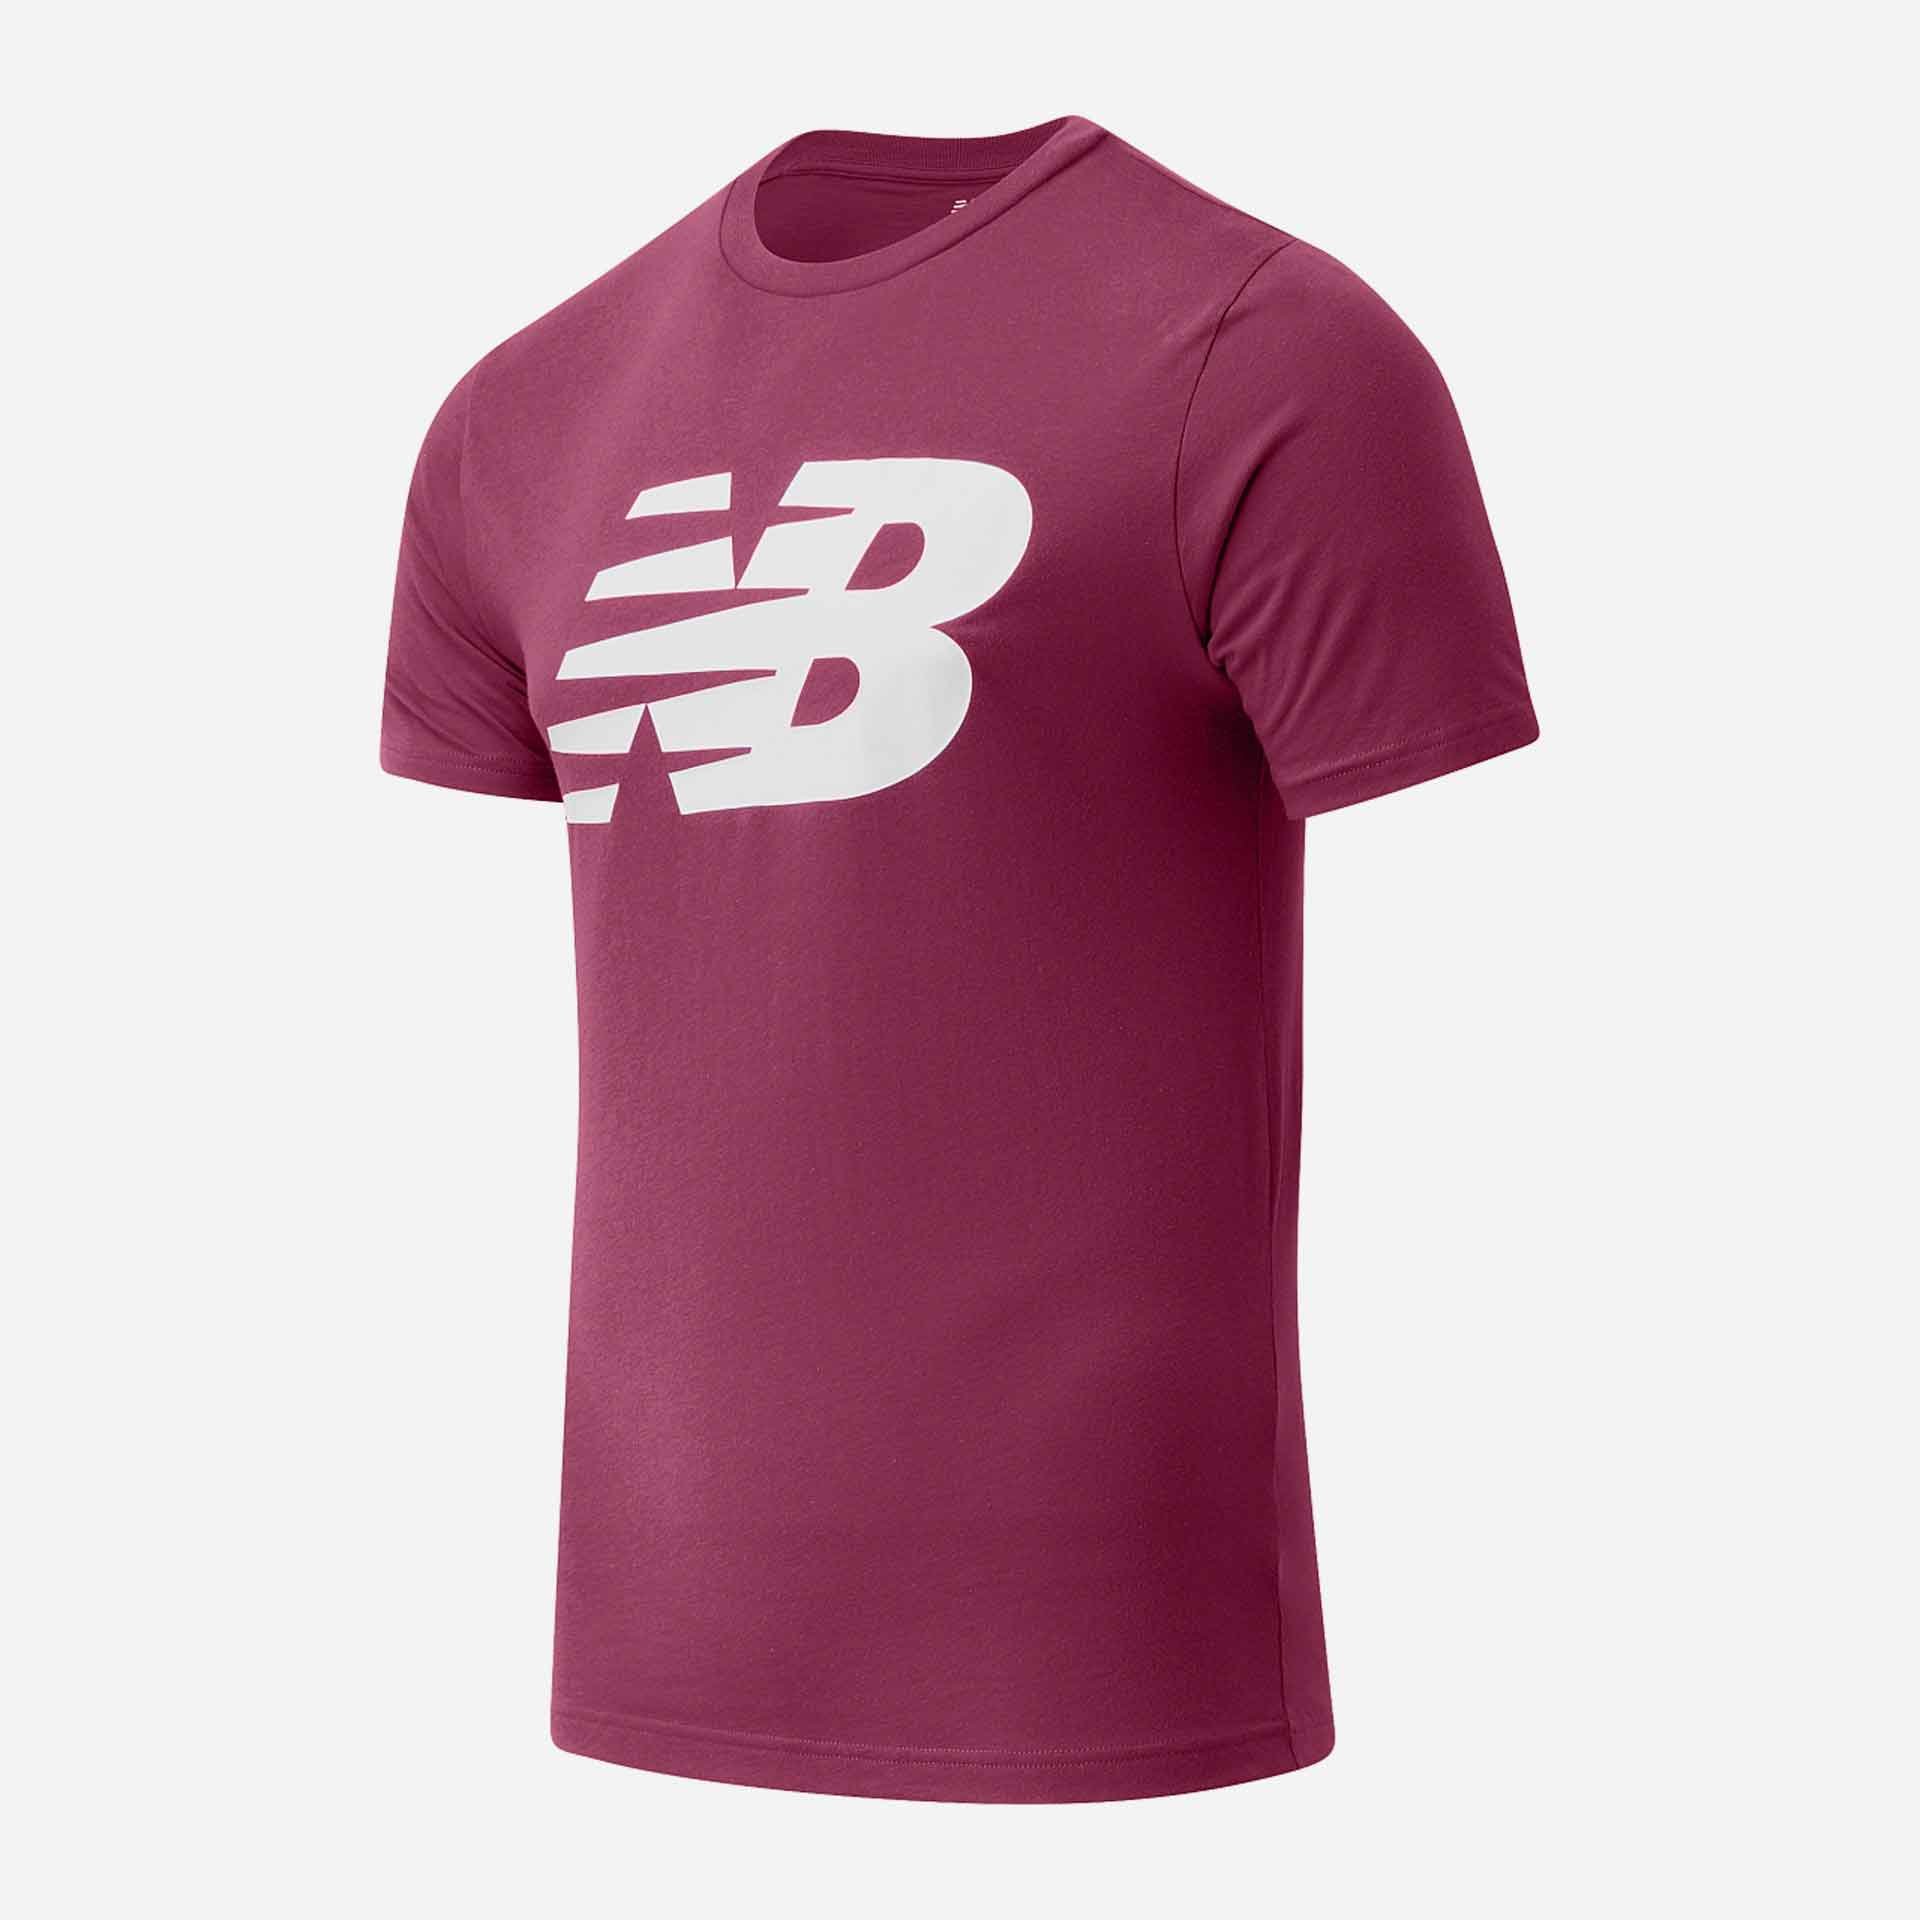 New Balance Classic NB T-Shirt Burgundy